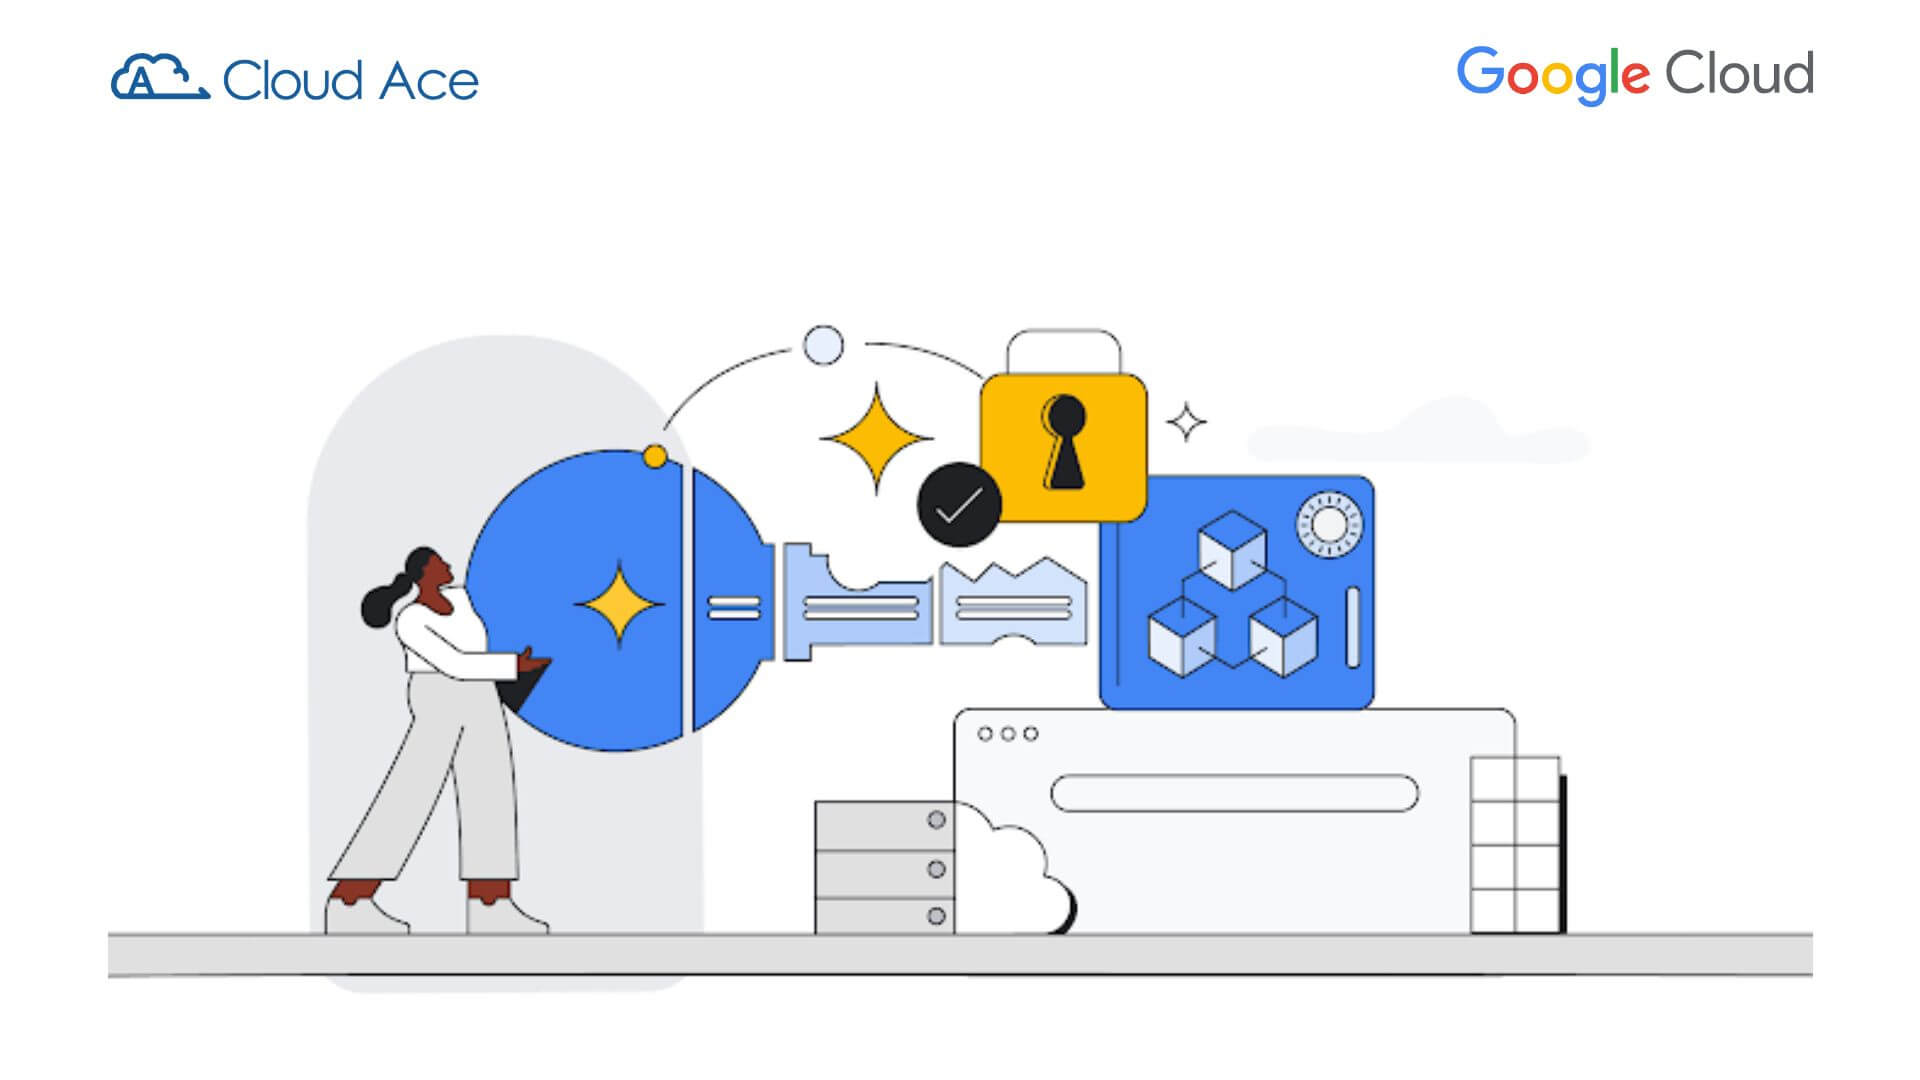 Running nodes on Google Cloud